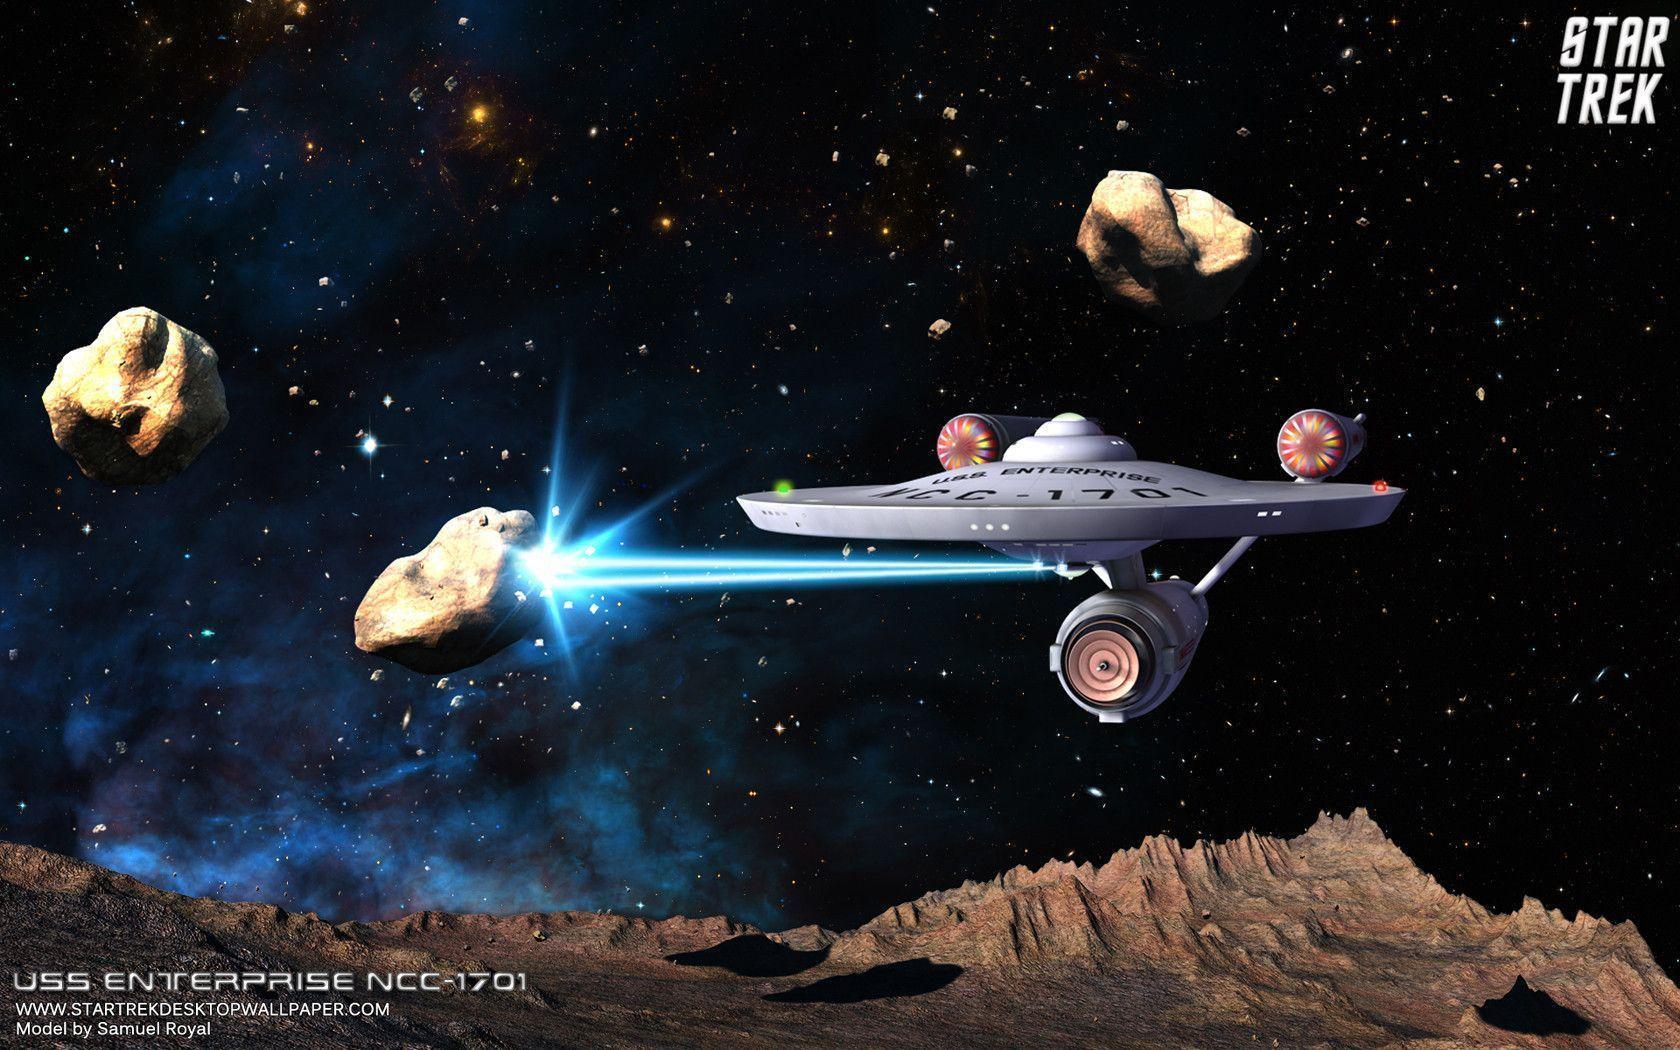 Star Trek Enterprise NCC1701 In Asteroid Field, free Star Trek